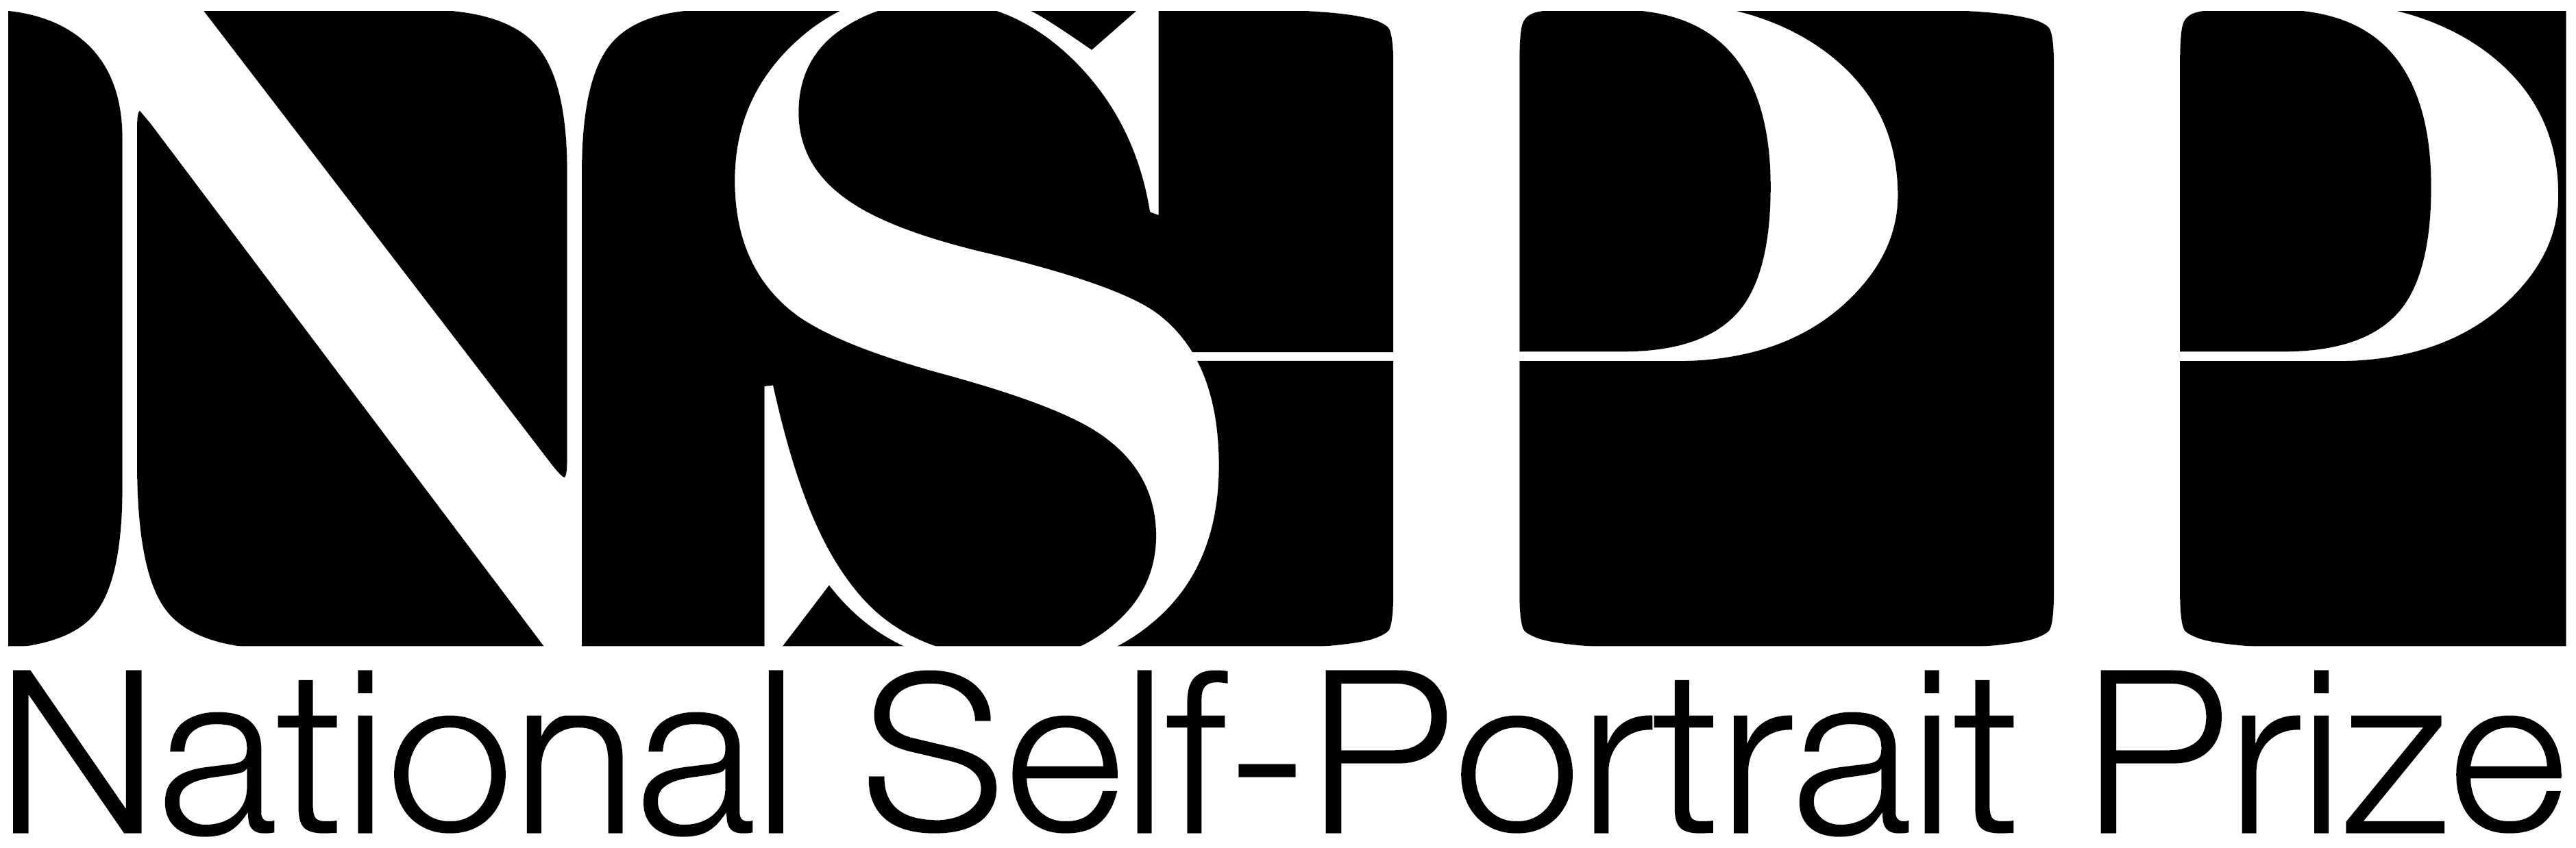 National Self-Portrait Prize logo